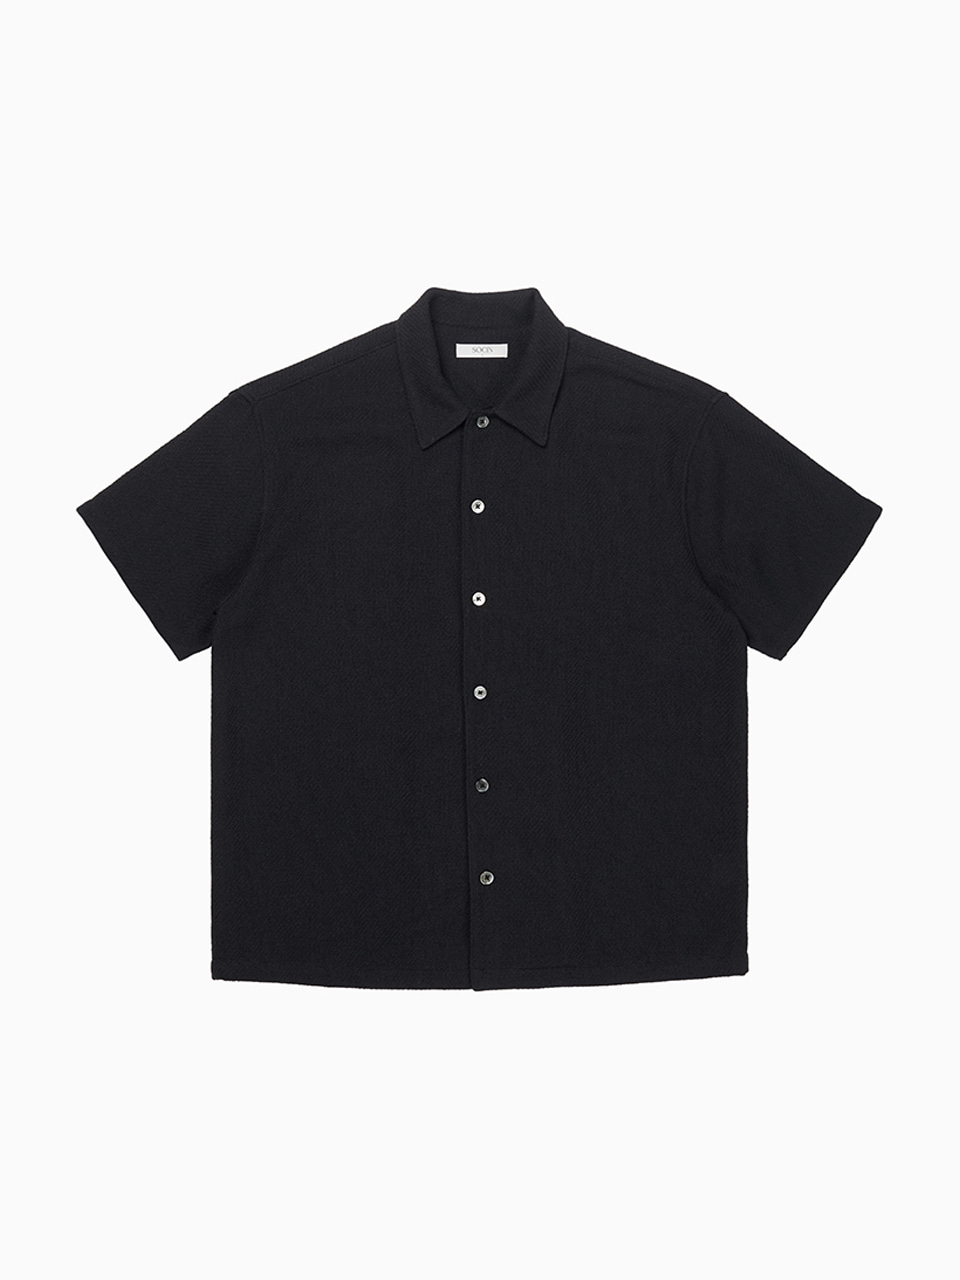 Wicker Weave Half Shirts (Black)